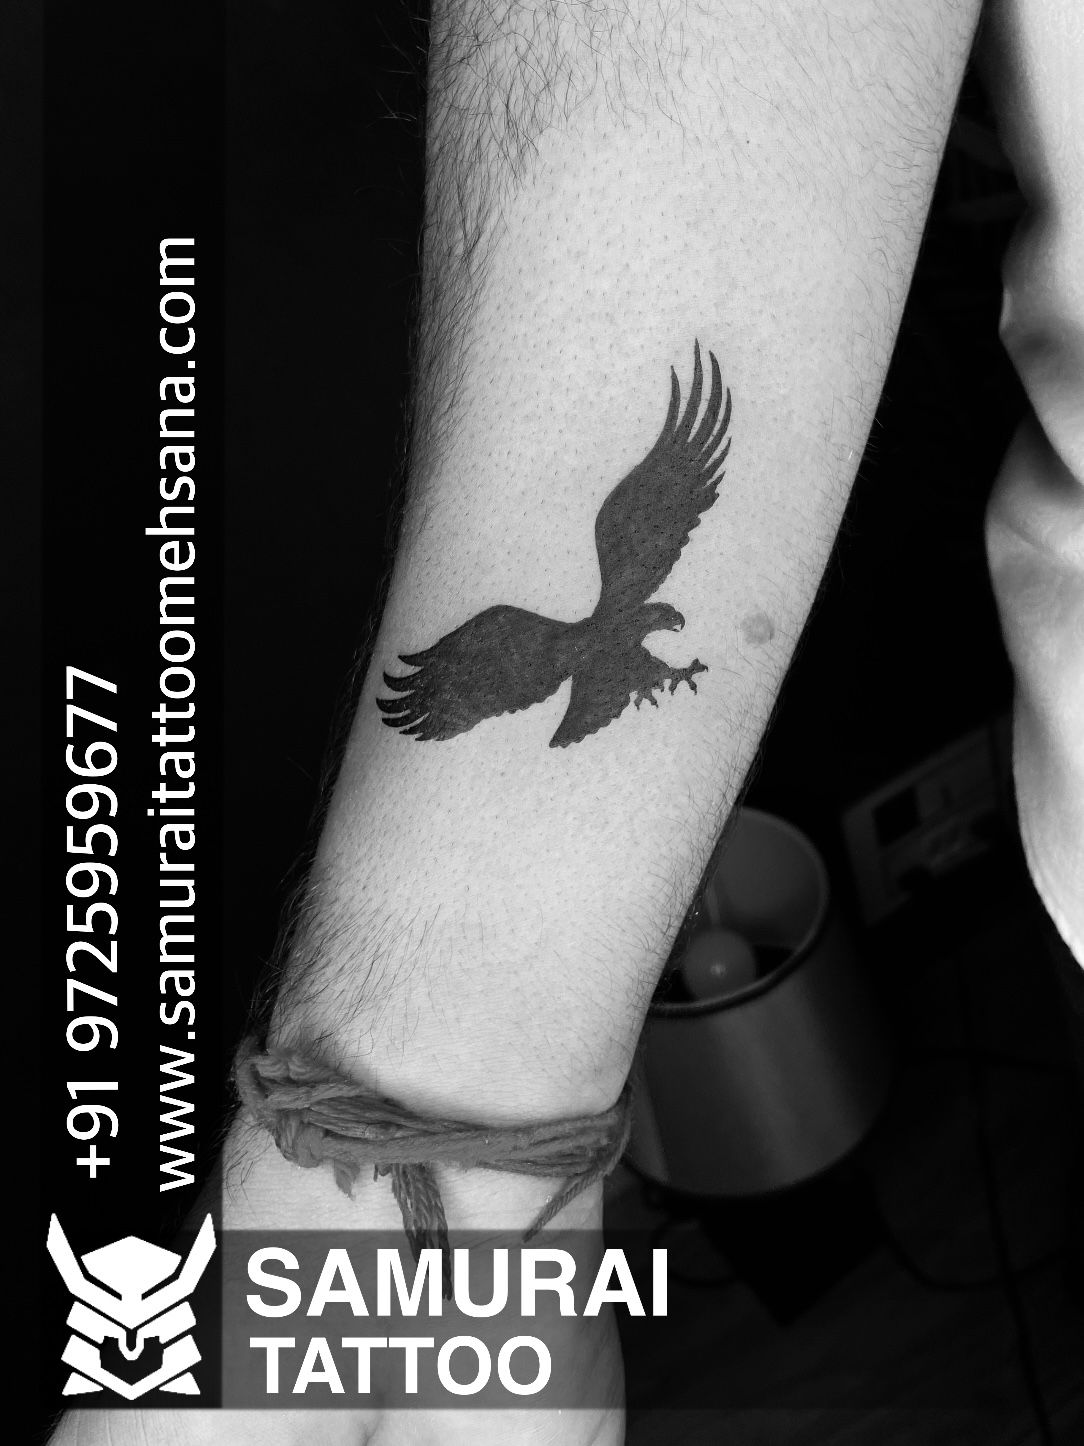 Tattoo uploaded by Vipul Chaudhary • Eagle tattoo |Eagle tattoo ...